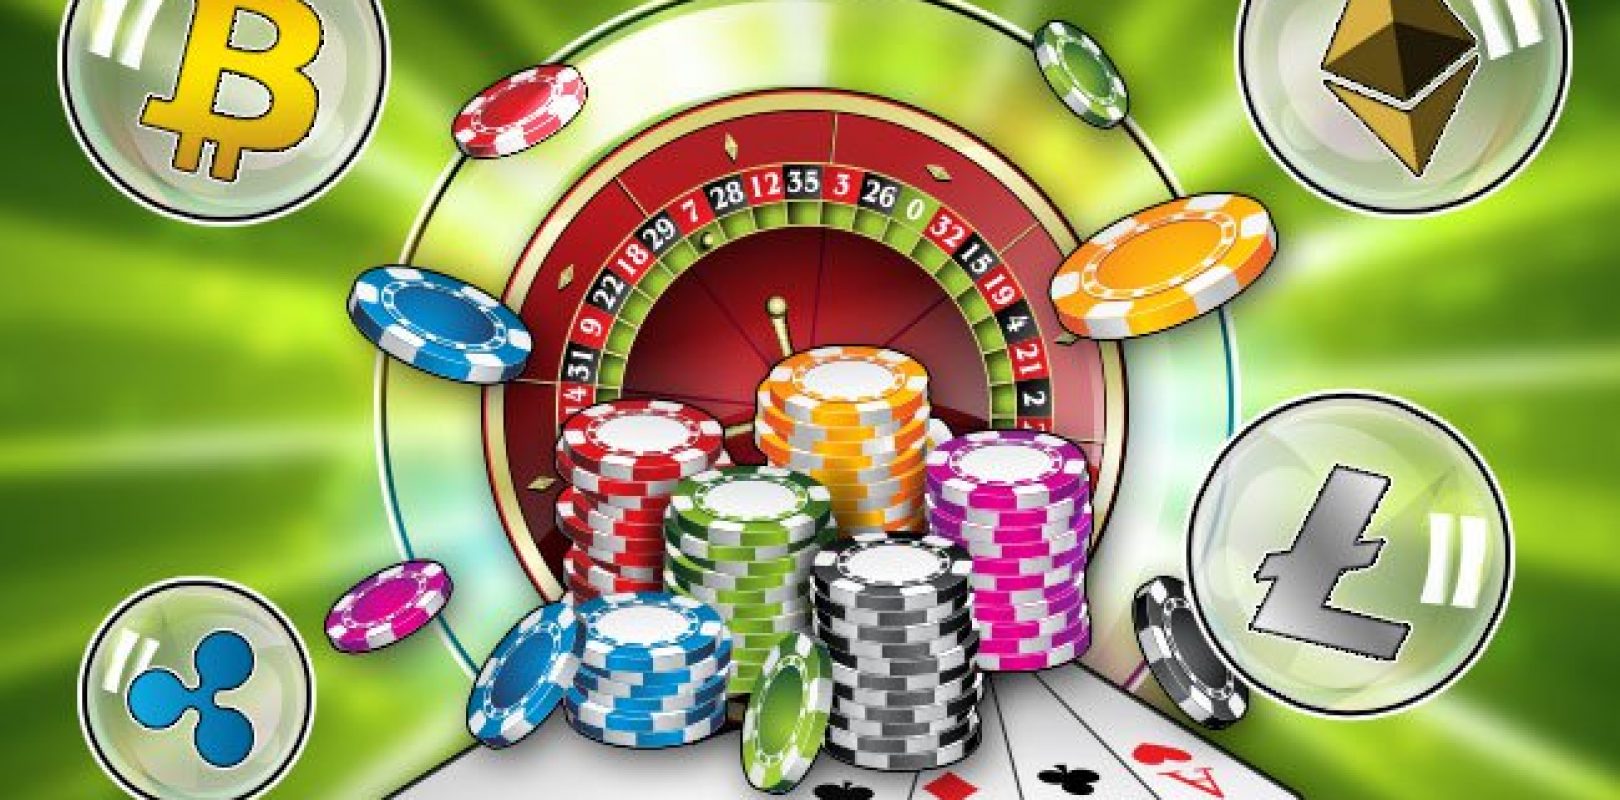 Villa fortuna casino new player no deposit bonus